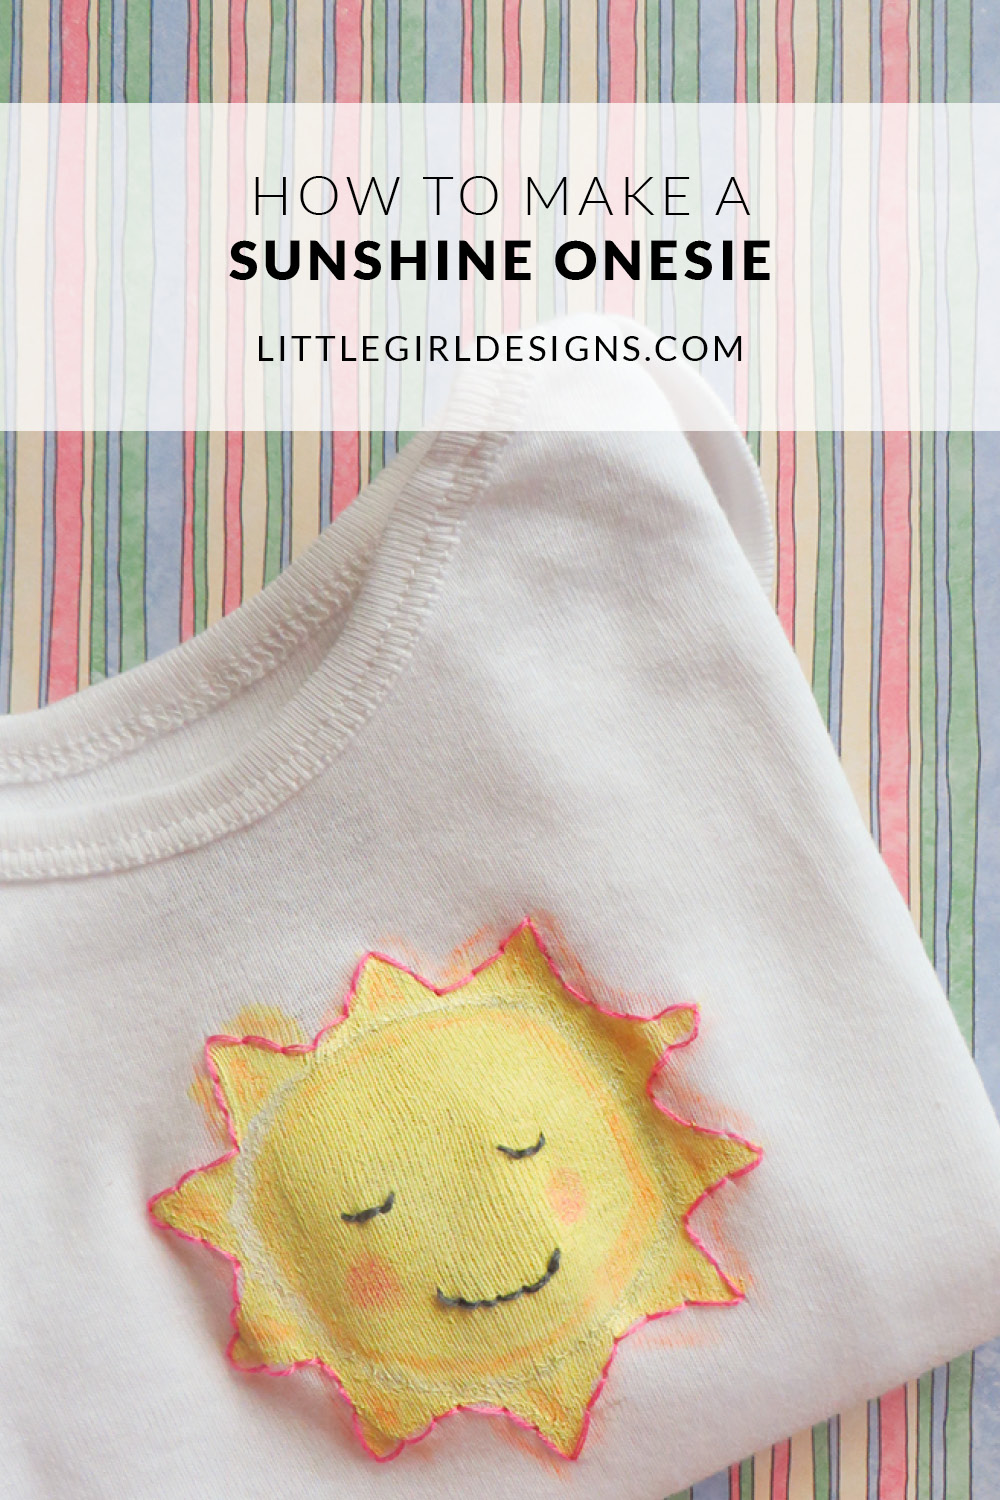 How to Make a Sunshine Onesie